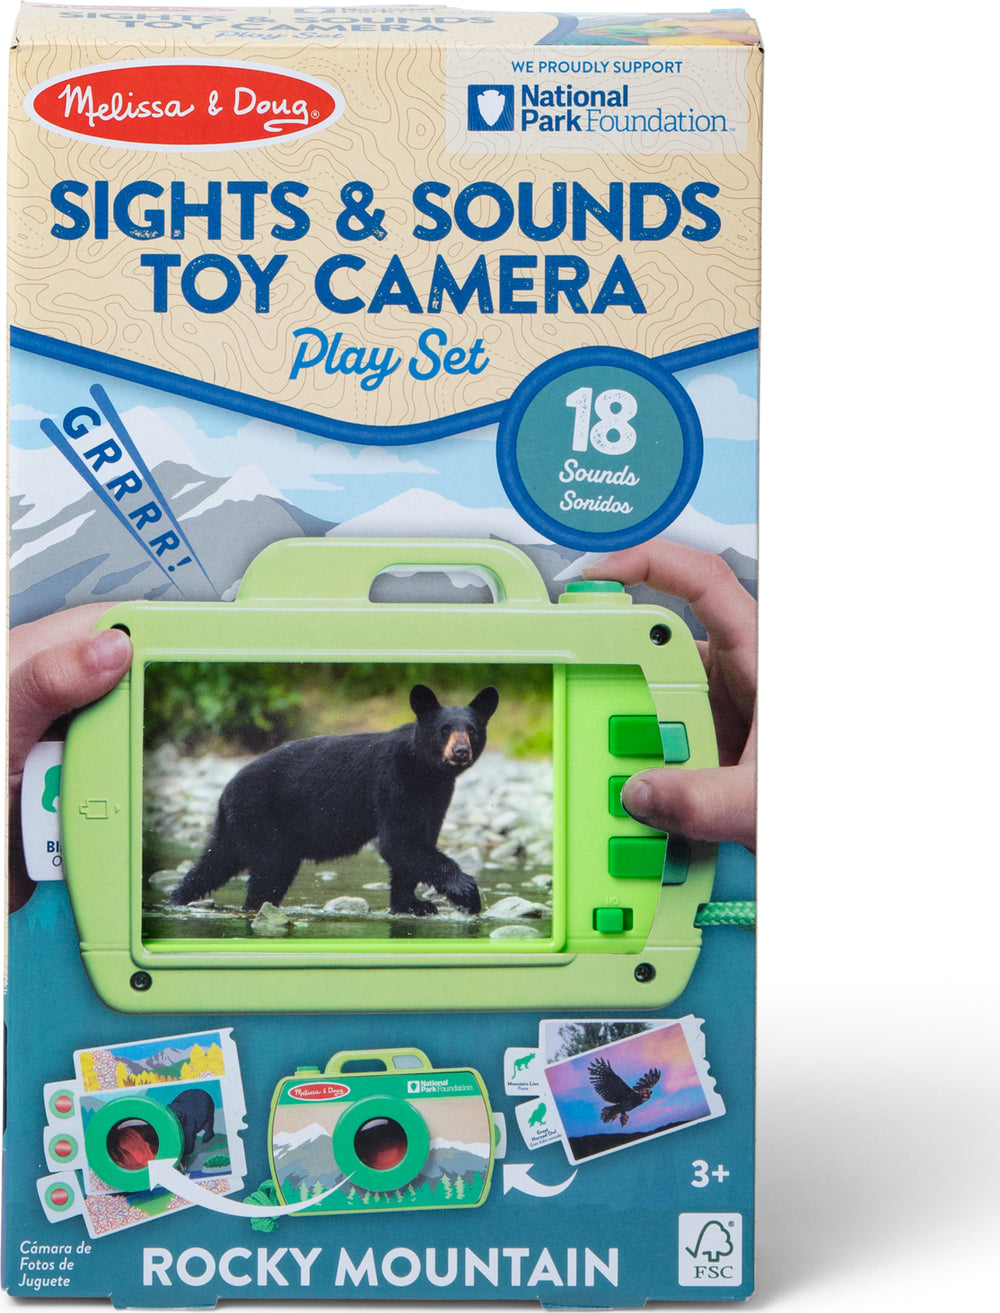 ROCKY MOUNTAIN Sights & Sounds Toy Camera Play Set